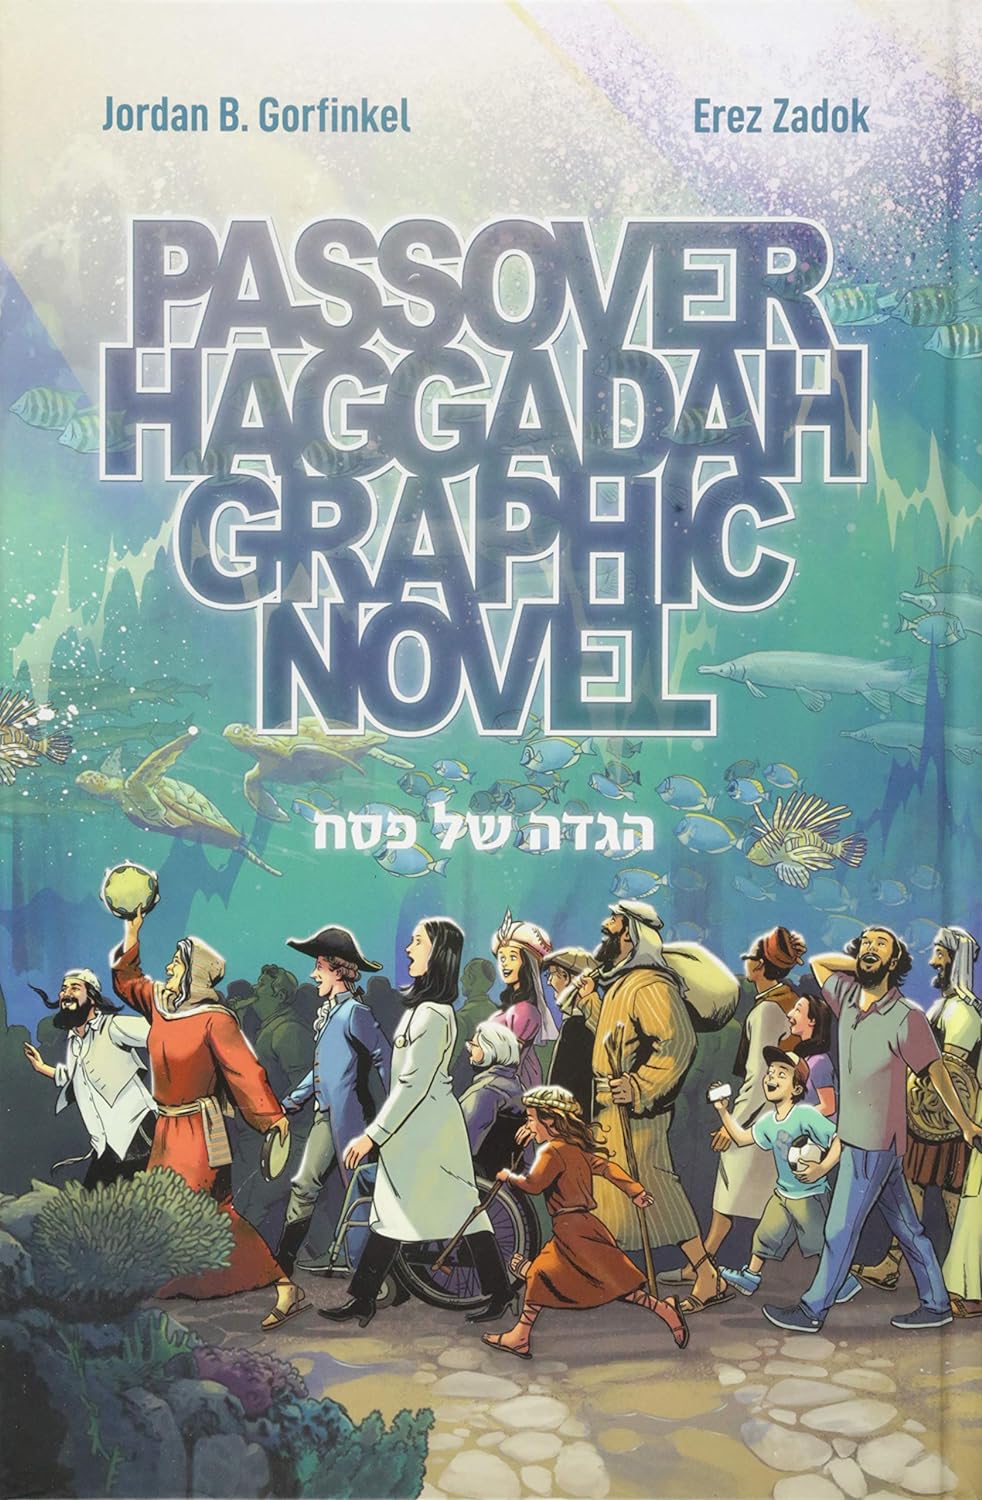 Best Jewish Books - Passover Haggadah Graphic Novel